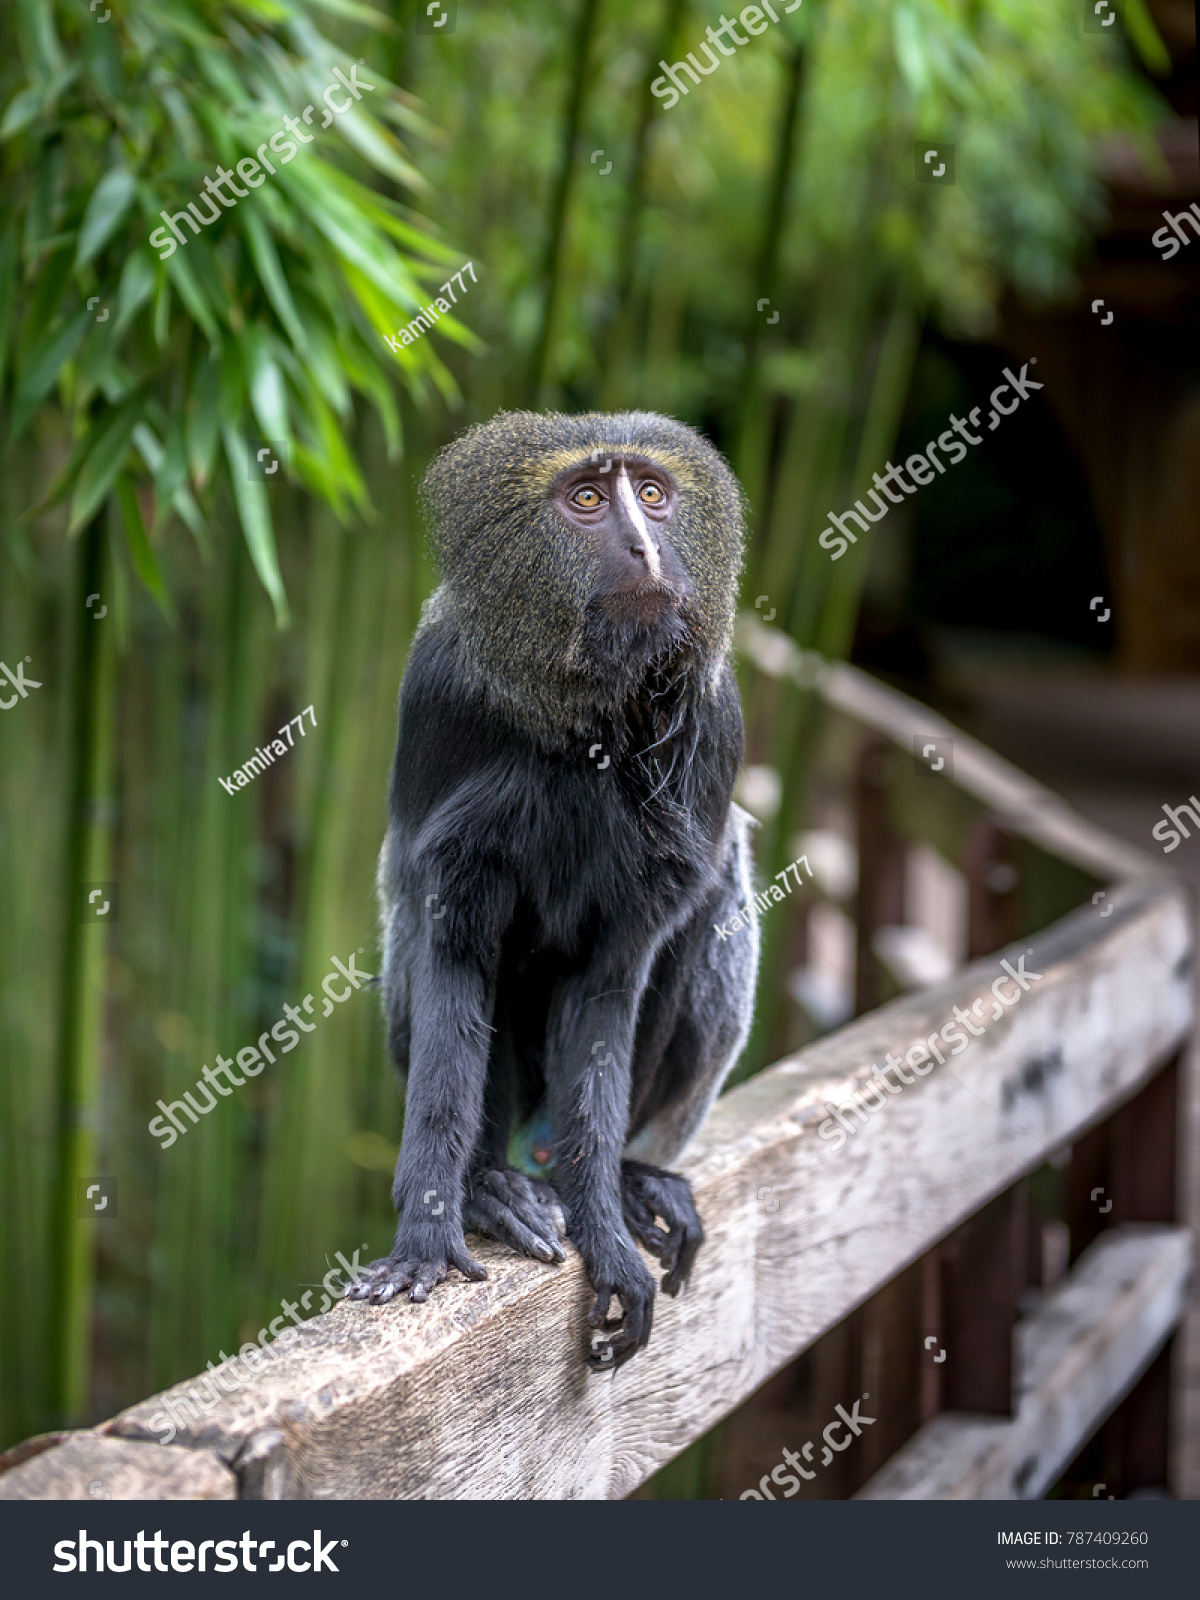 Hamlyns Owlfaced Monkey Sits On Fence Stock Photo (Royalty Free ...